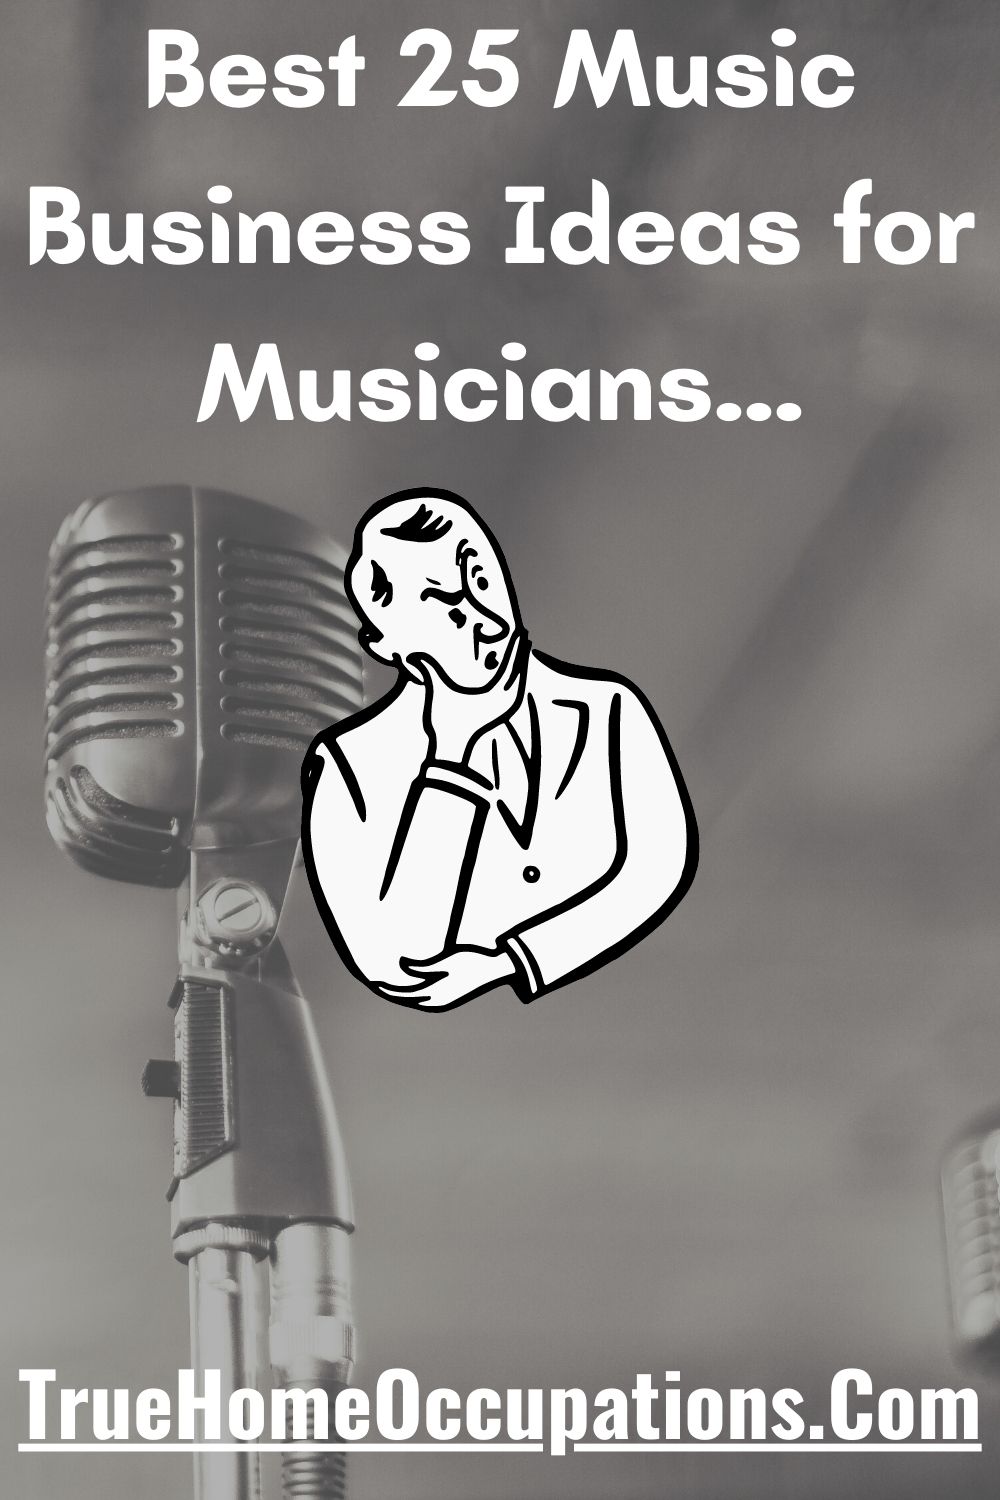 Best 25 Music Business Ideas for Musicians - TrueHomeOccupations.Com